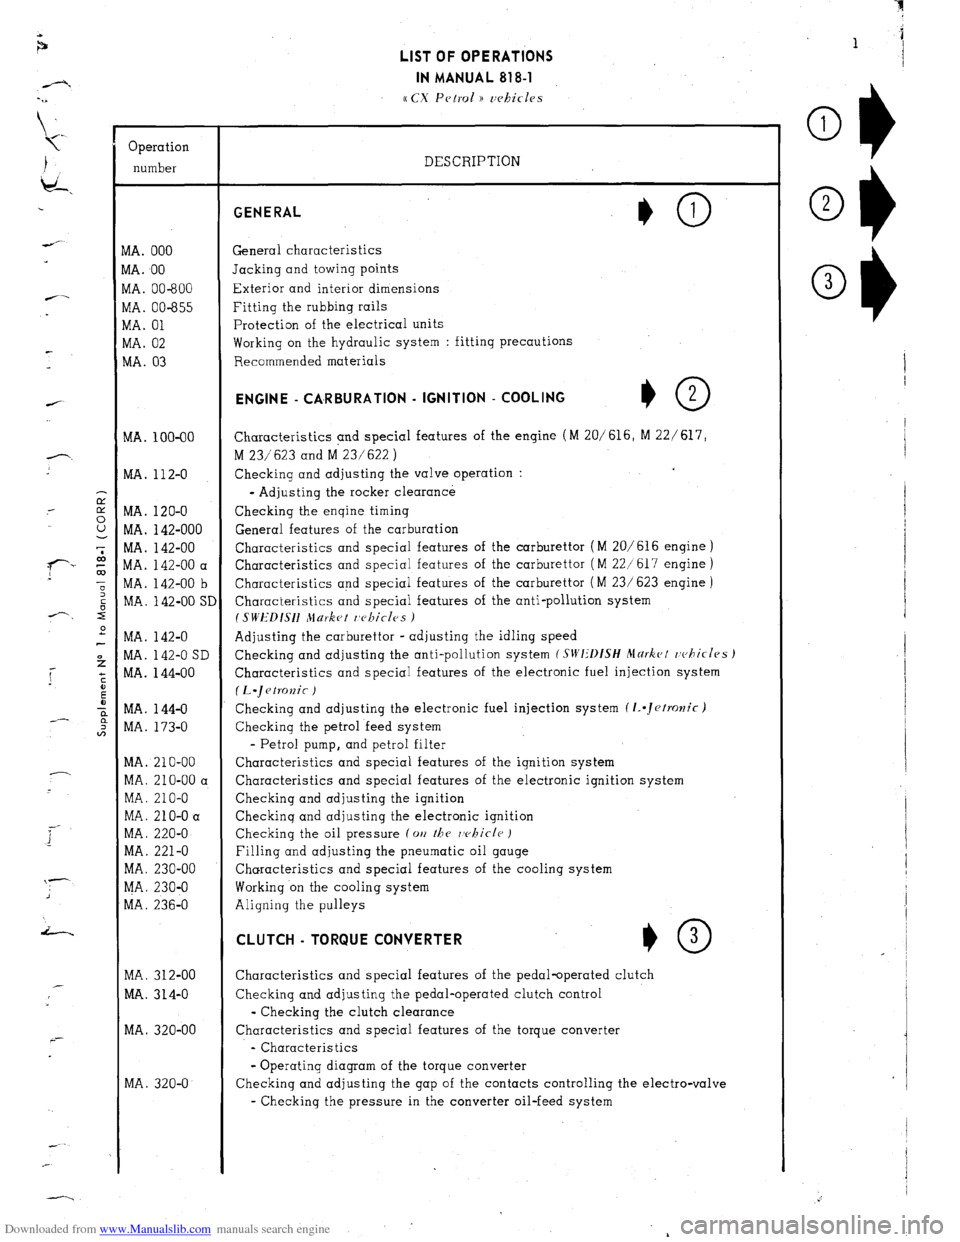 Citroen CX 1985 1.G Workshop Manual Downloaded from www.Manualslib.com manuals search engine Operation 
number 
VIA. 000 
VIA. 00 
VIA. 00-600 
vlA. 00-655 
VIA. 01 
WA. 02 
MA. 03 
MA. 100-00 
MA. 112-O 
MA. 120-O 
MA. 142-000 
MA. 142